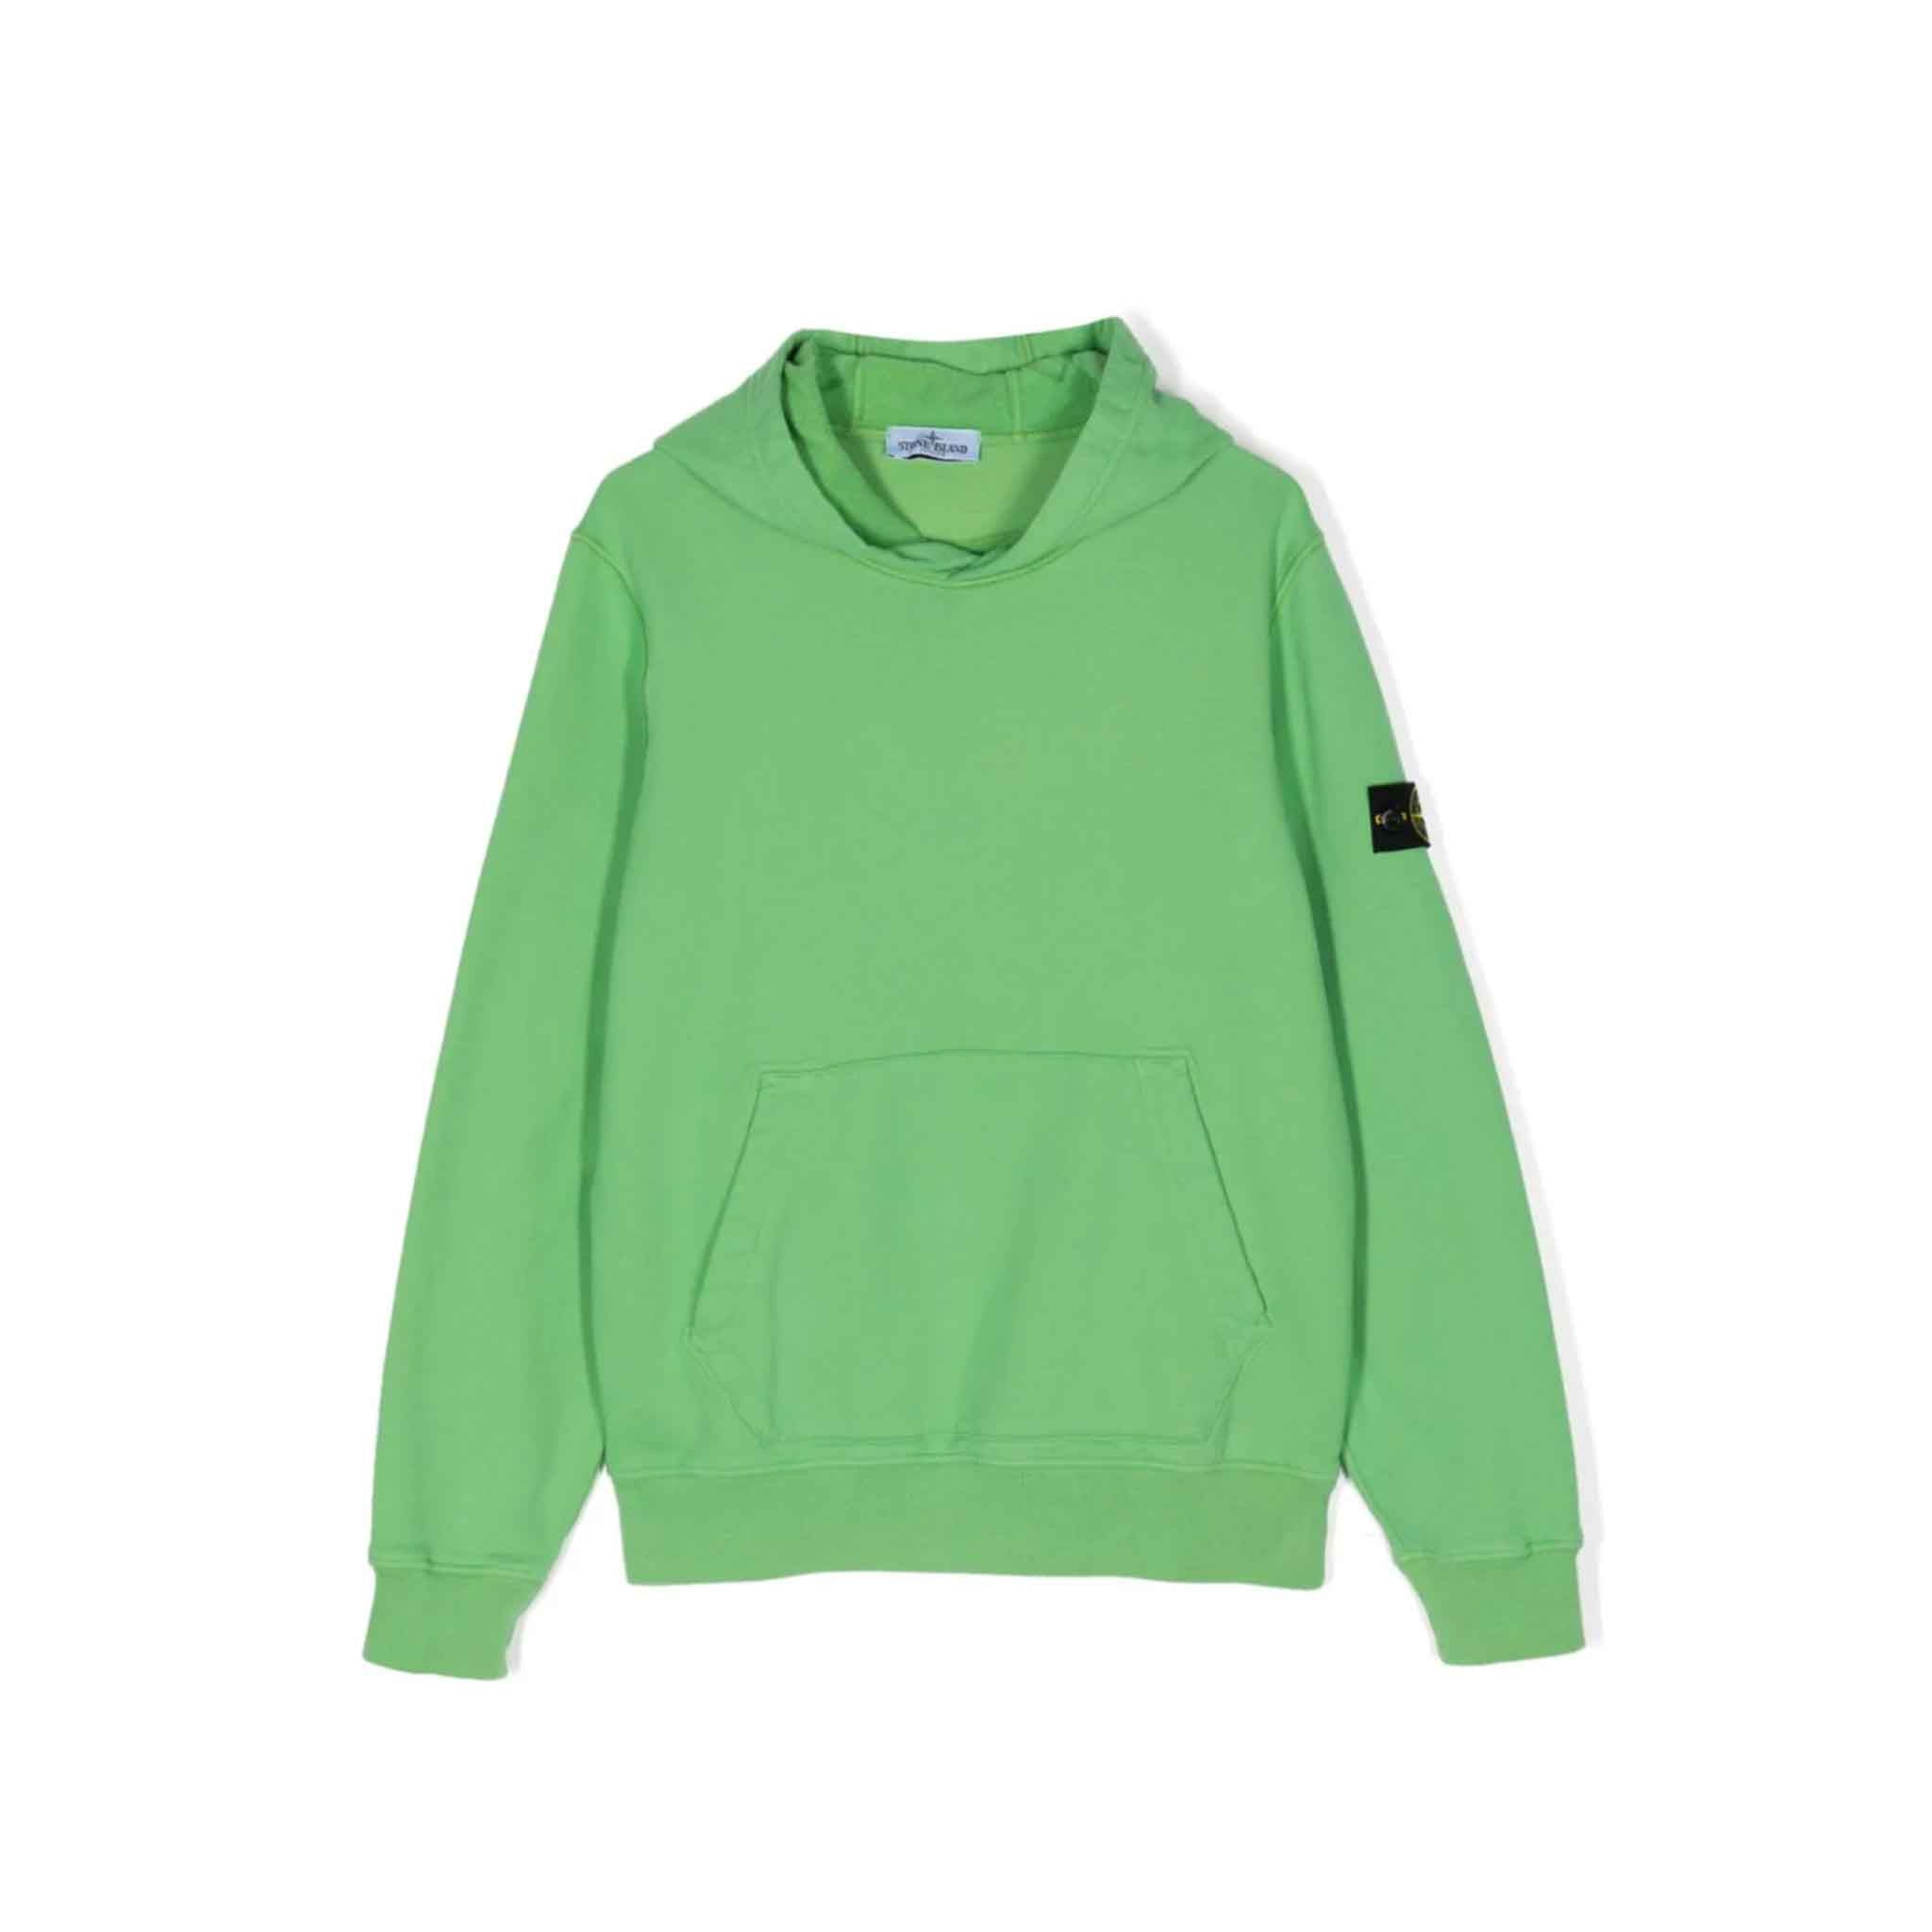 Stone Island Junior Hooded Sweatshirt in Green